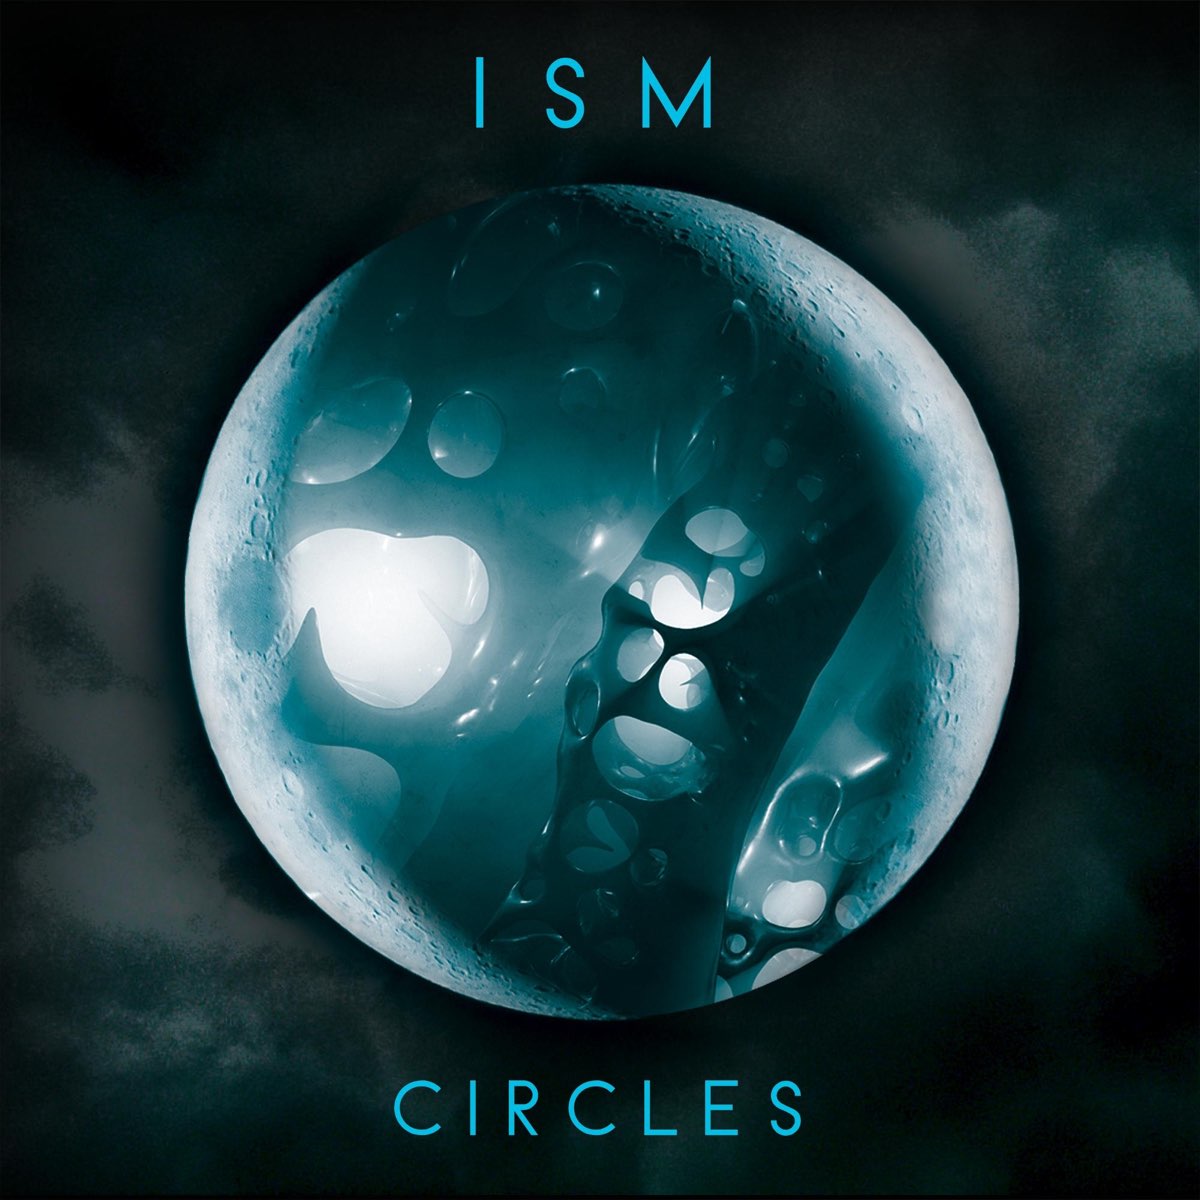 Circle альбом. Circle музыка. Circles песня. One circle album.